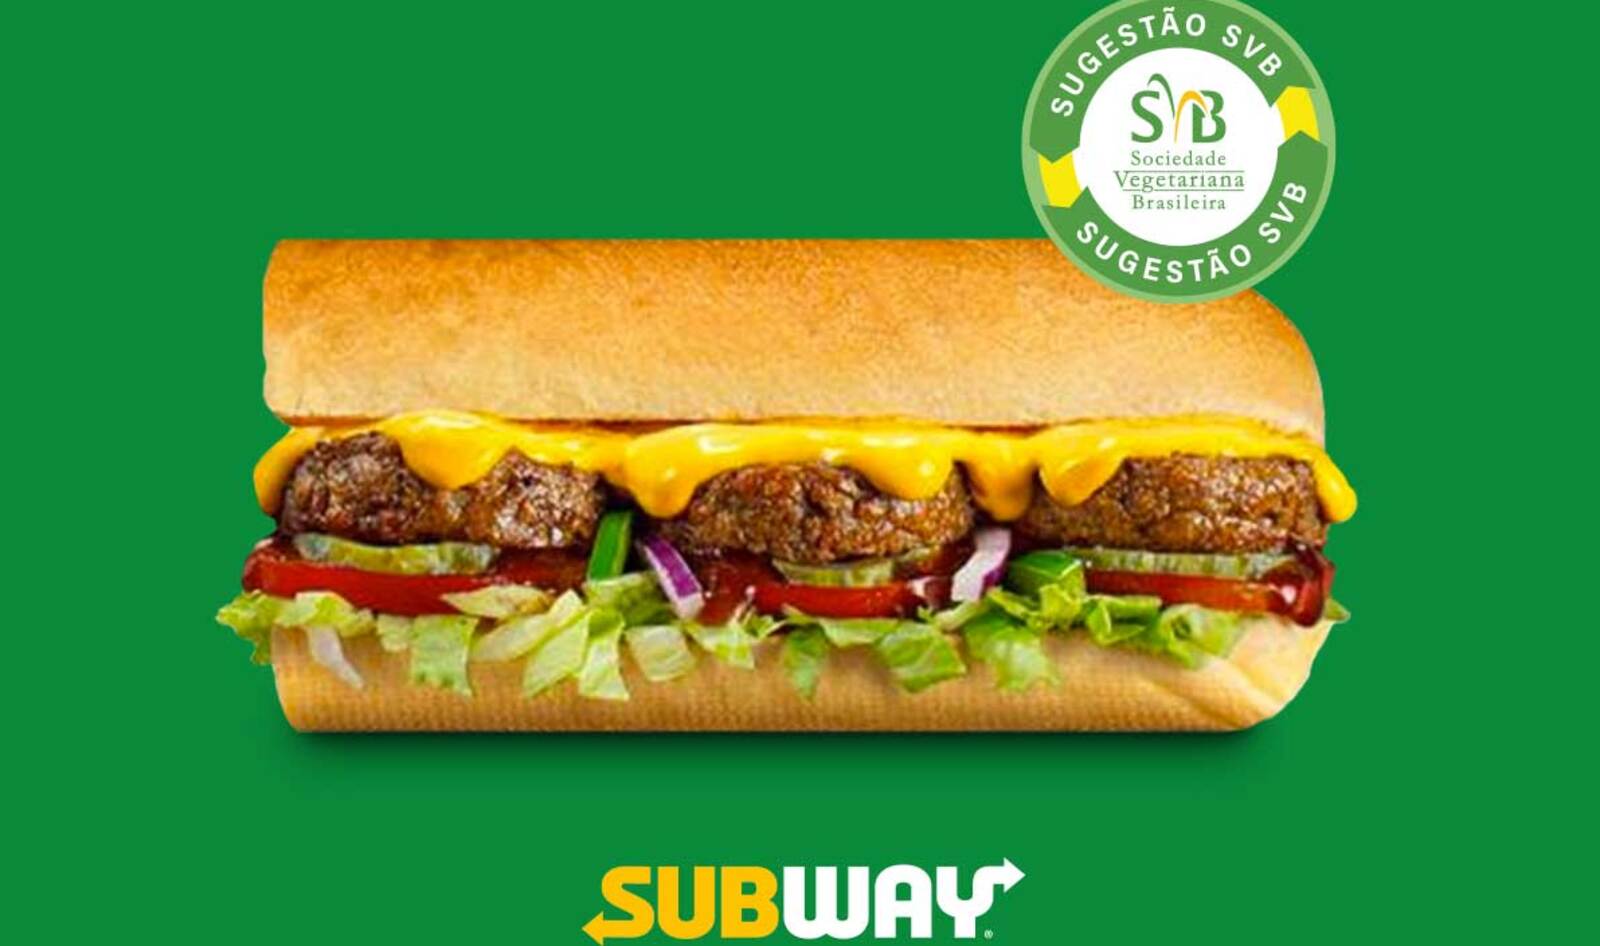 Subway Launches Vegan Cheese-Filled Sandwich Across Brazil